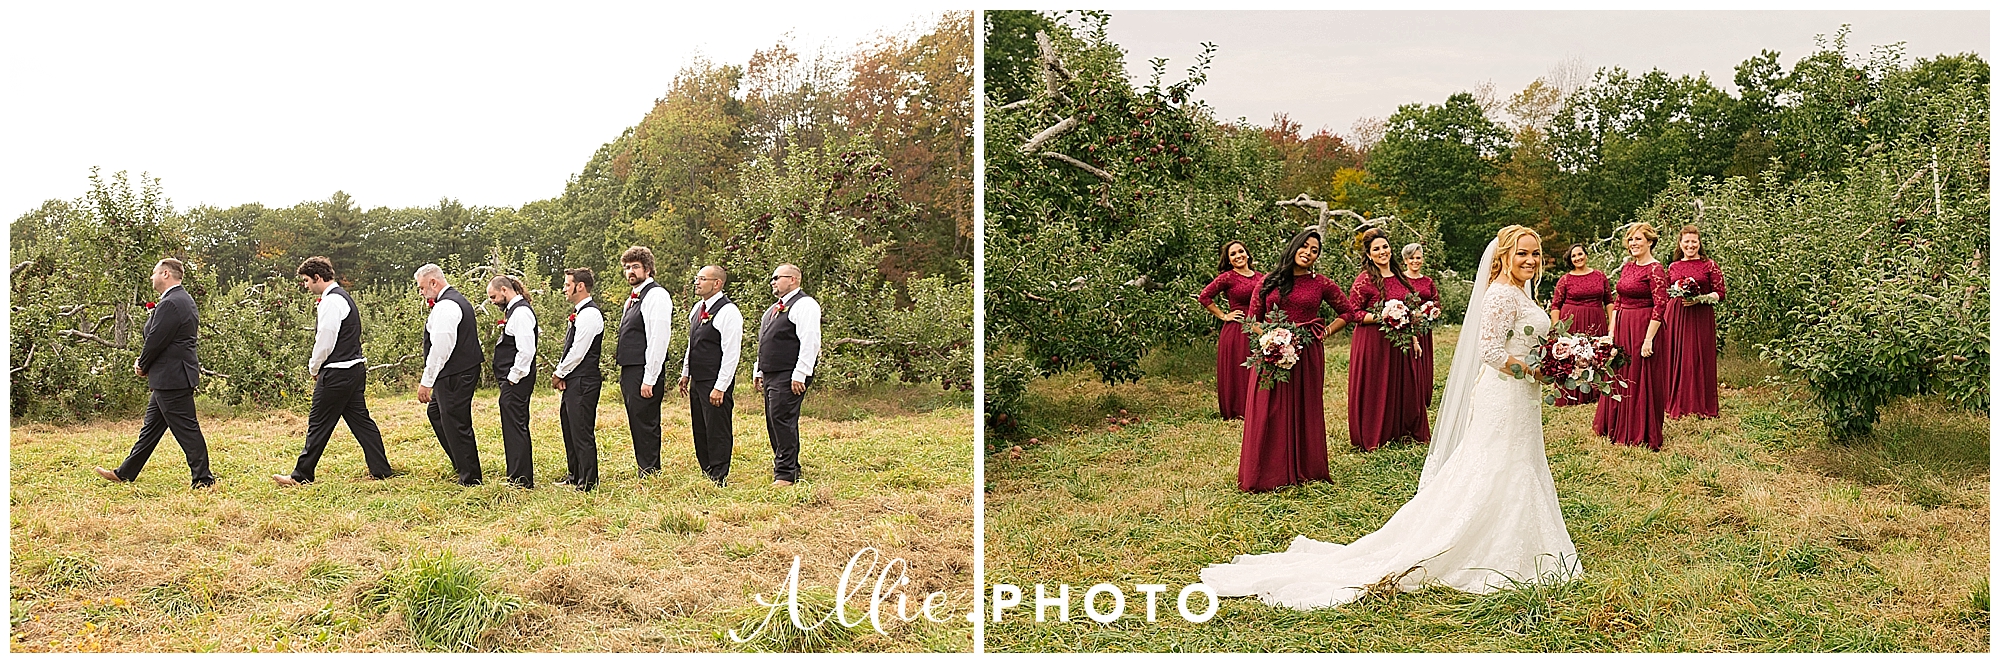 Massachusetts_wedding_photographer_red_apple_farm_boston_0029.jpg